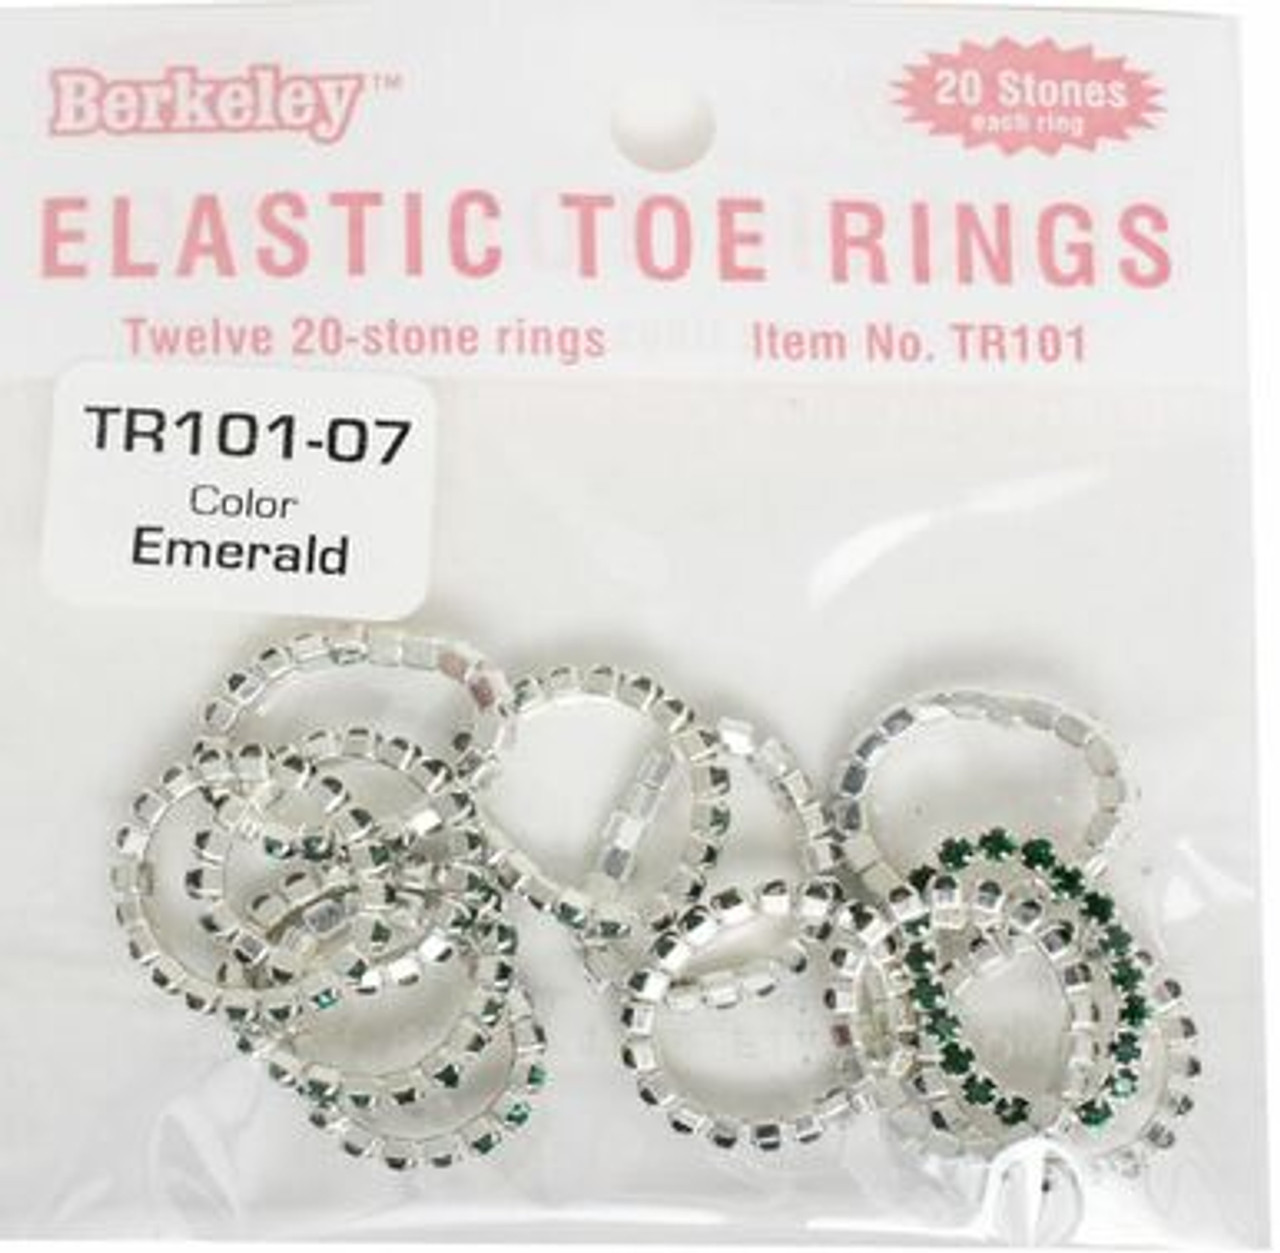 Berkeley Elastic Toe Ring Emerald {bag of 12 rings}